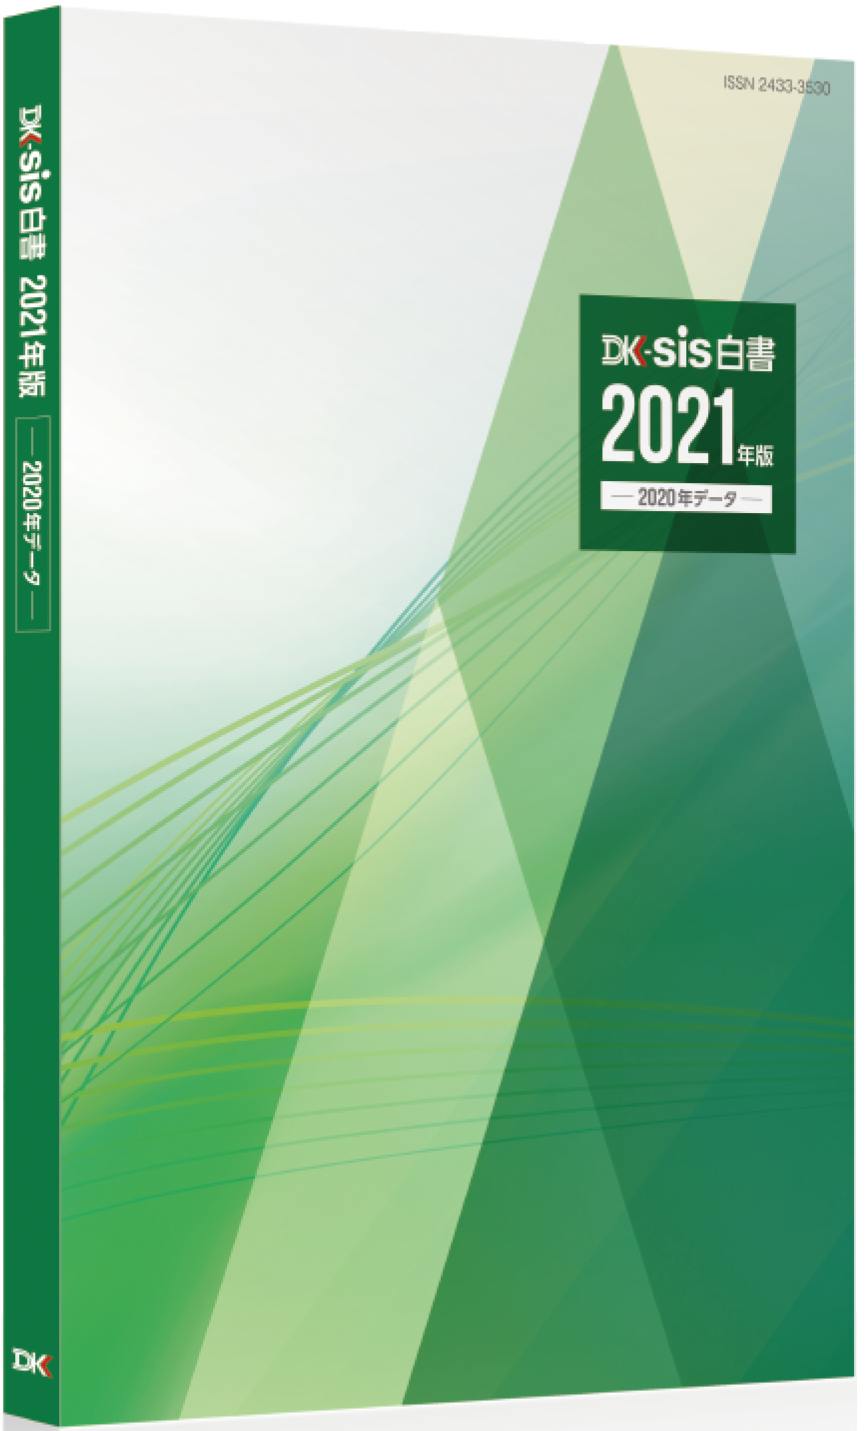 DK-SIS白書2021年版－2020年データ－